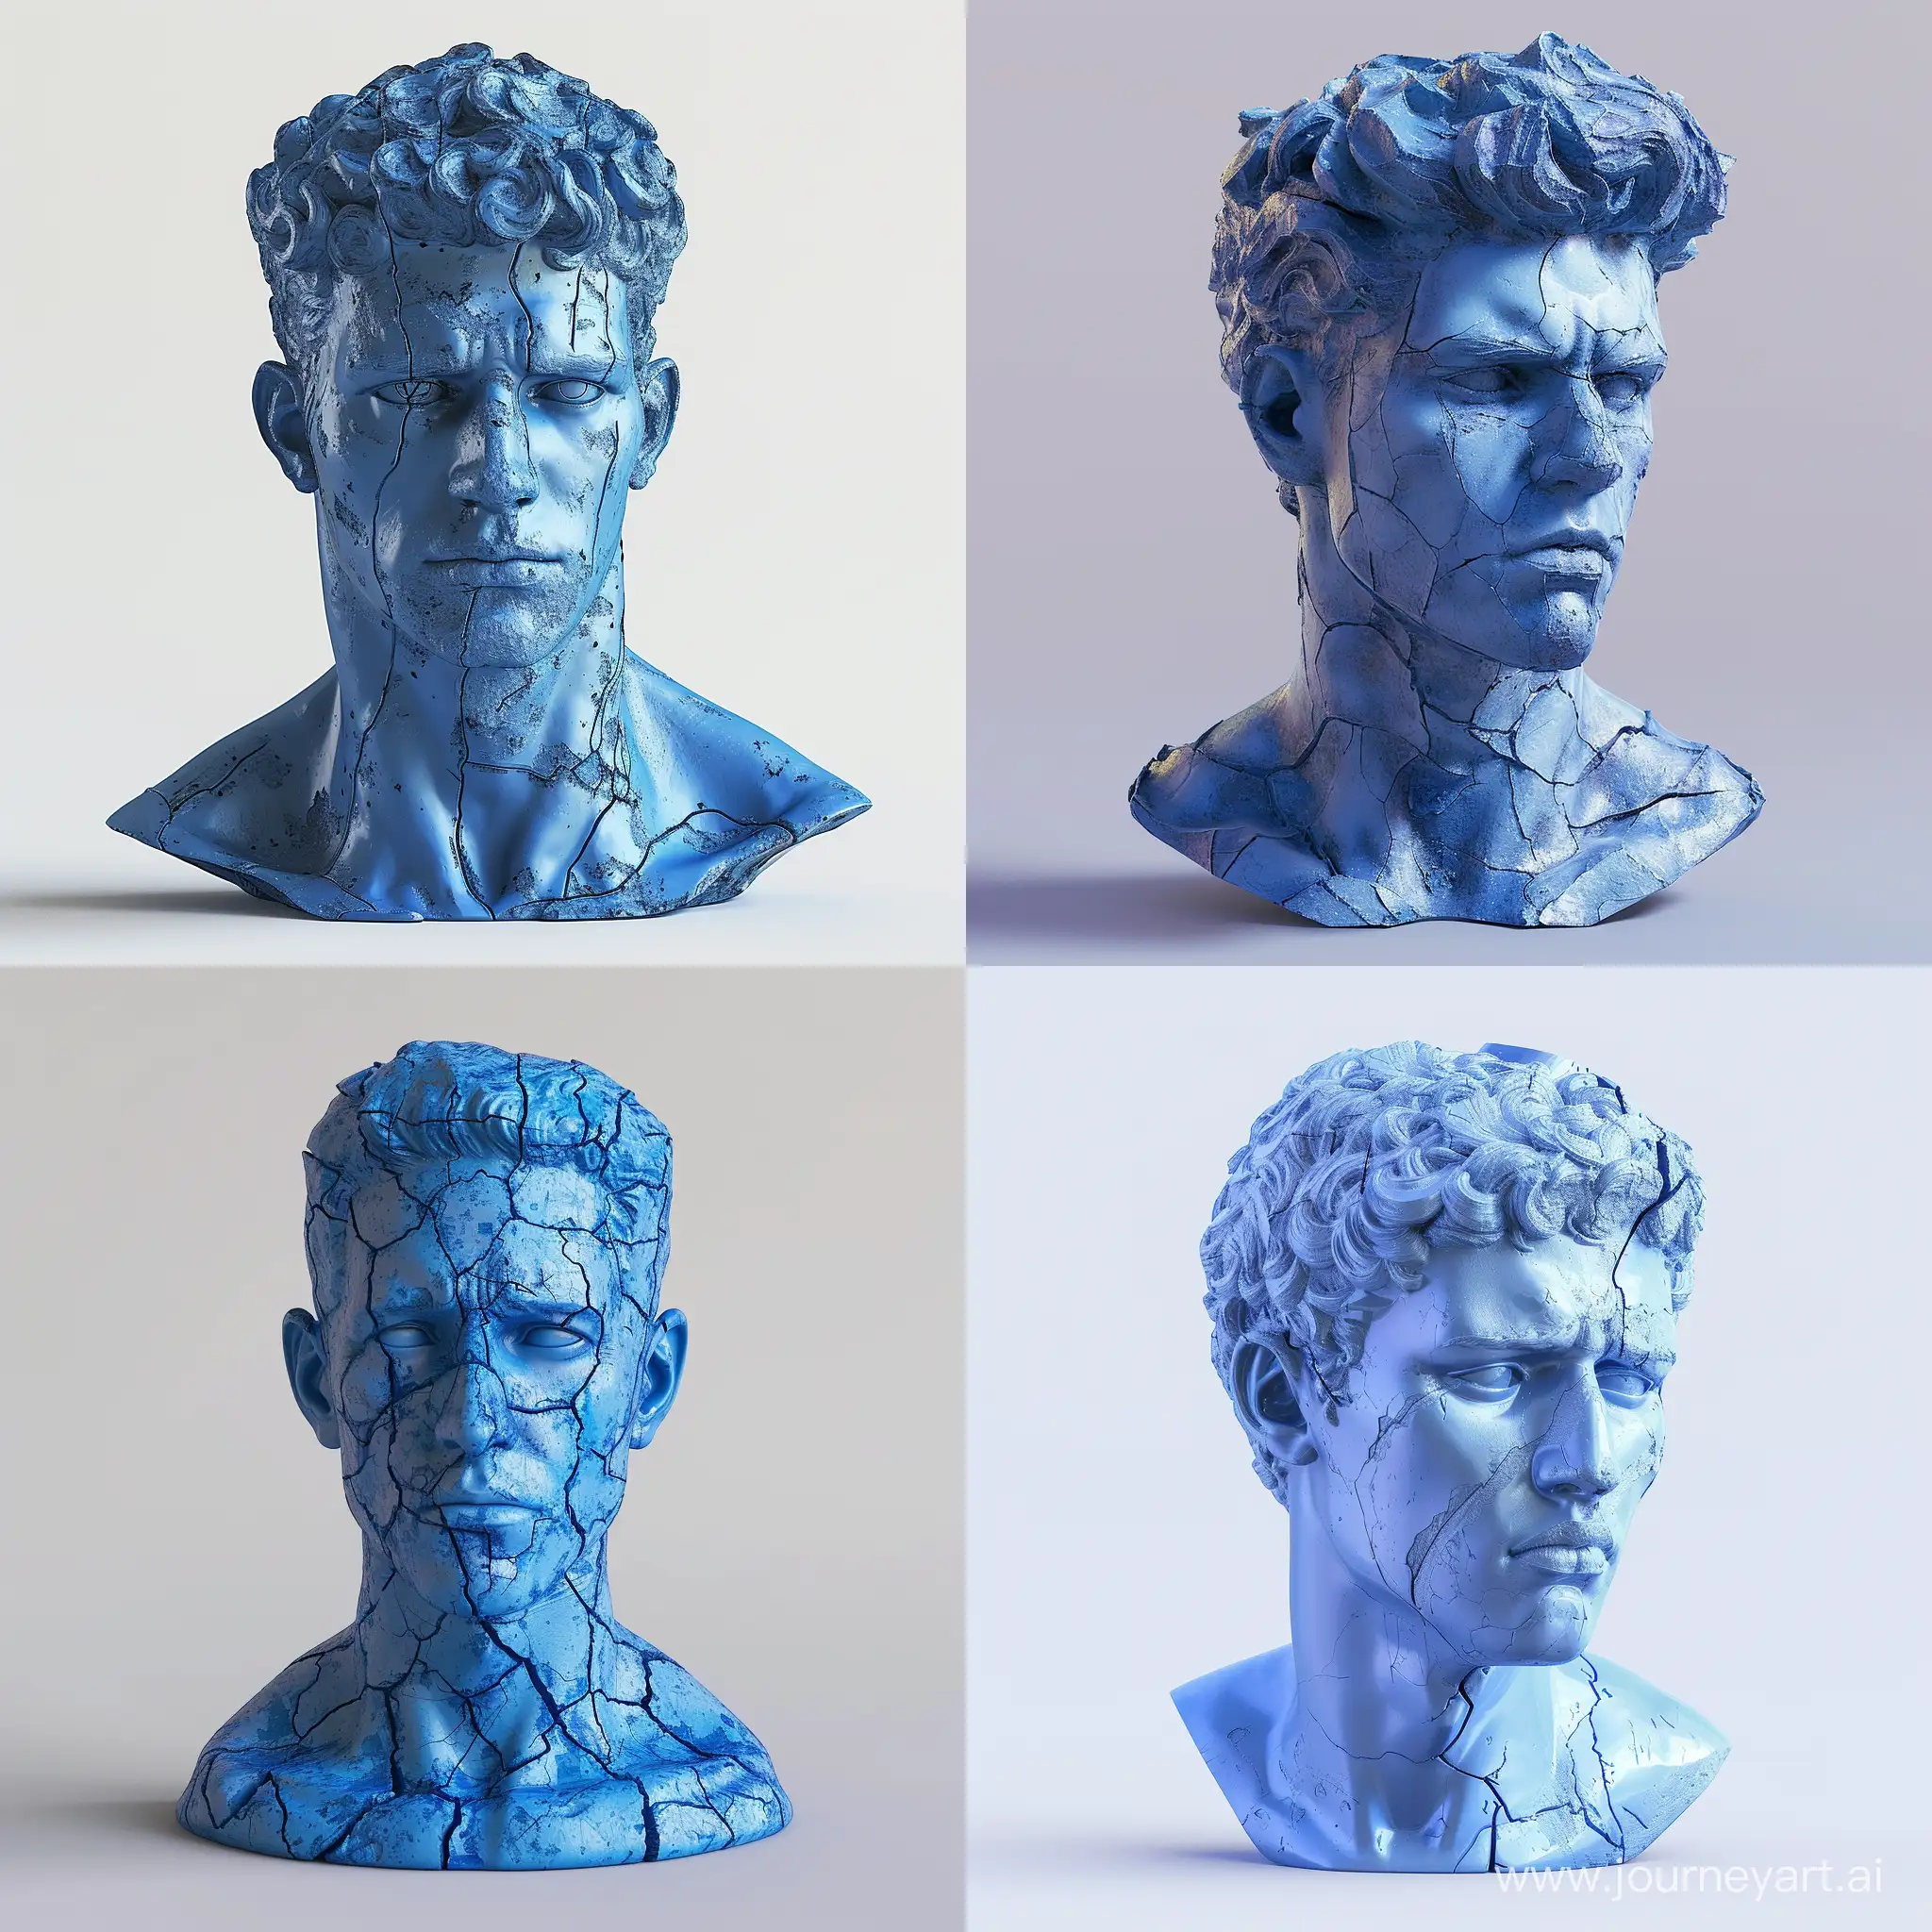 A Blue Sculpture of Men, Bust Style, Blistered Texture, Headshot Pose, Affinity Designer Software, High Precision --v 6.0